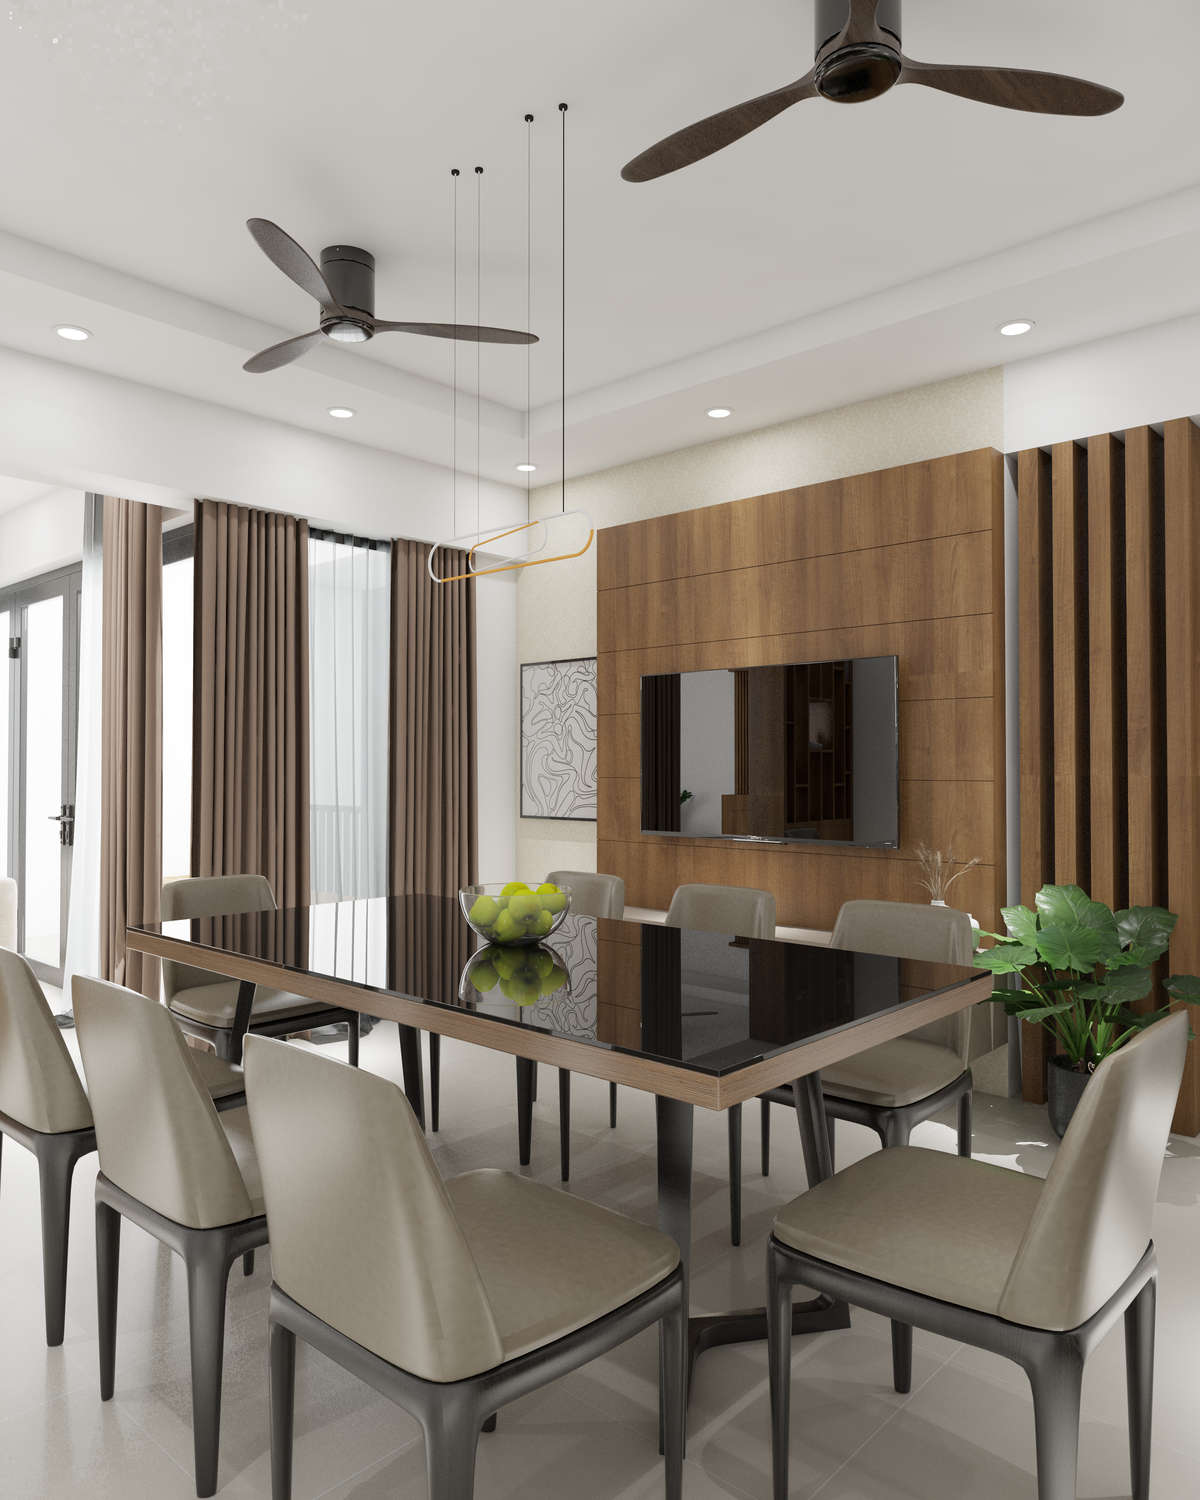 Apartment - Dining

#render #sketchup #vray #dining #interior